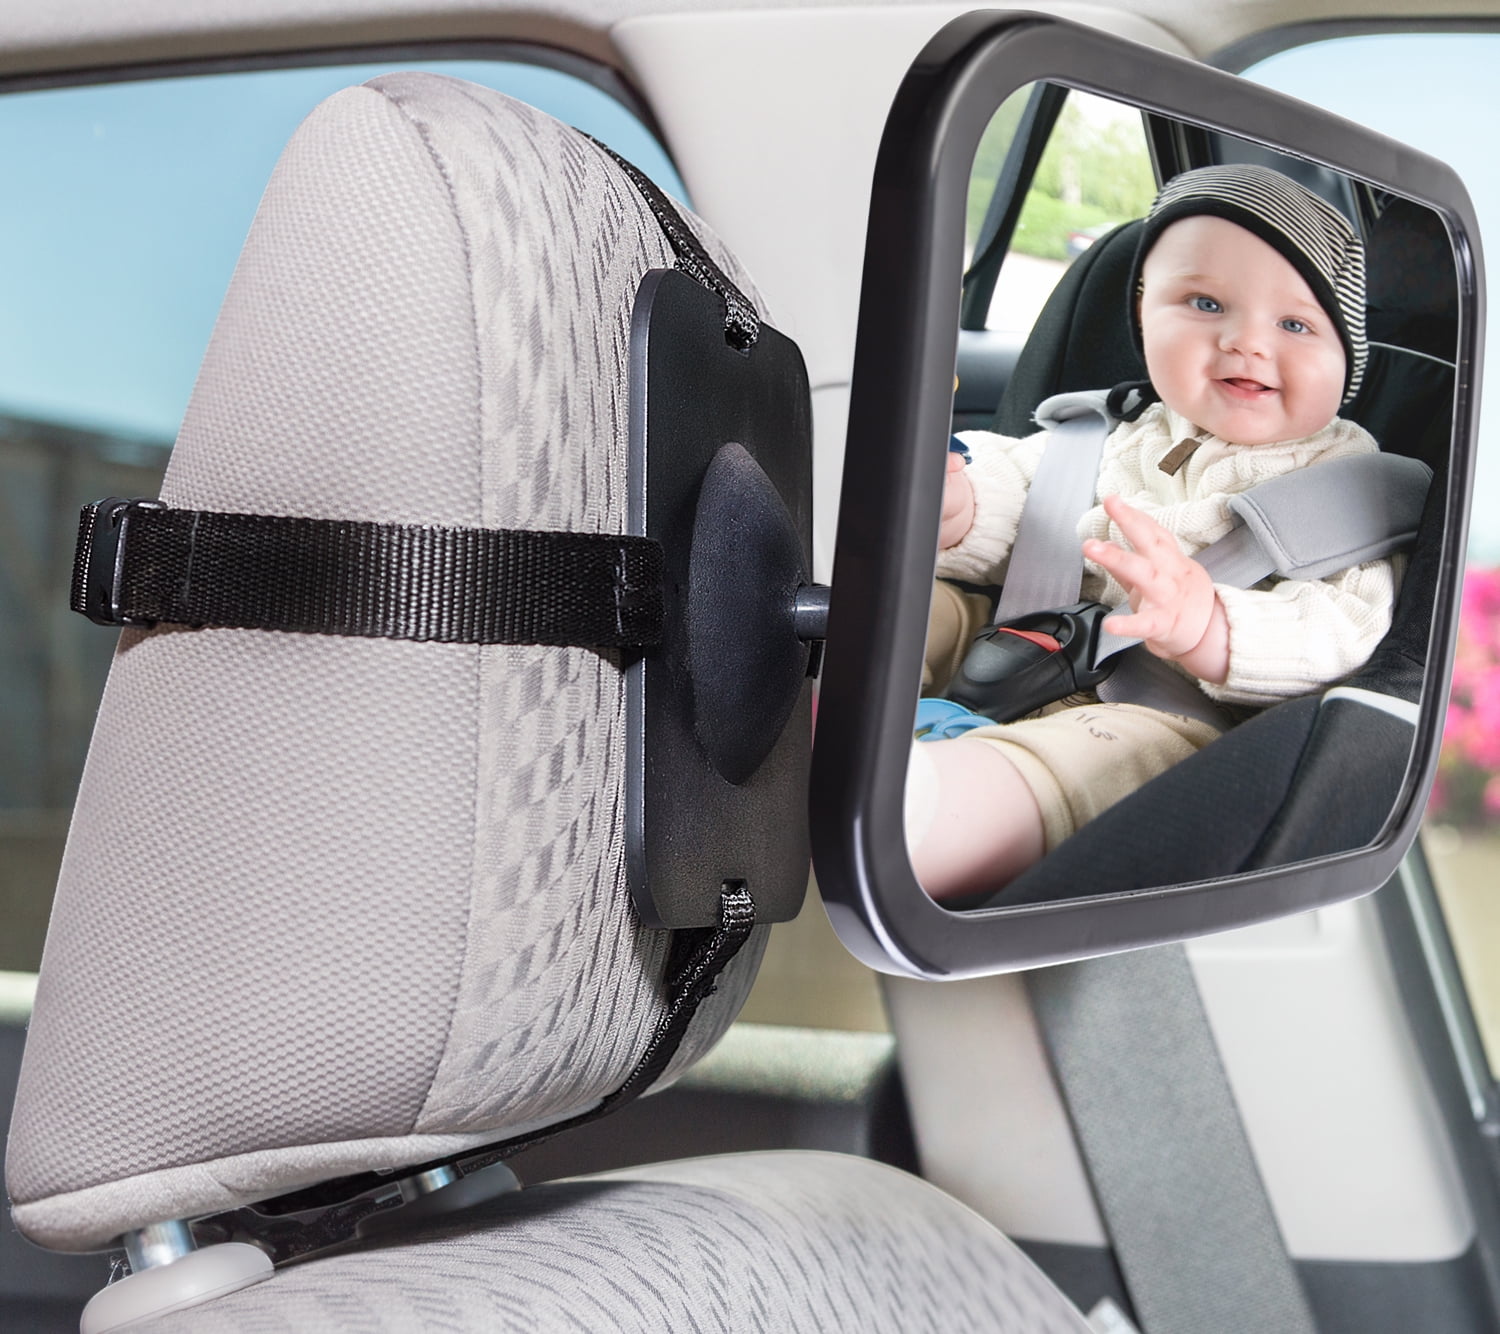 Car Baby Safety Mirror Rear View Back Seat Mirror Infant Kids children Safety 